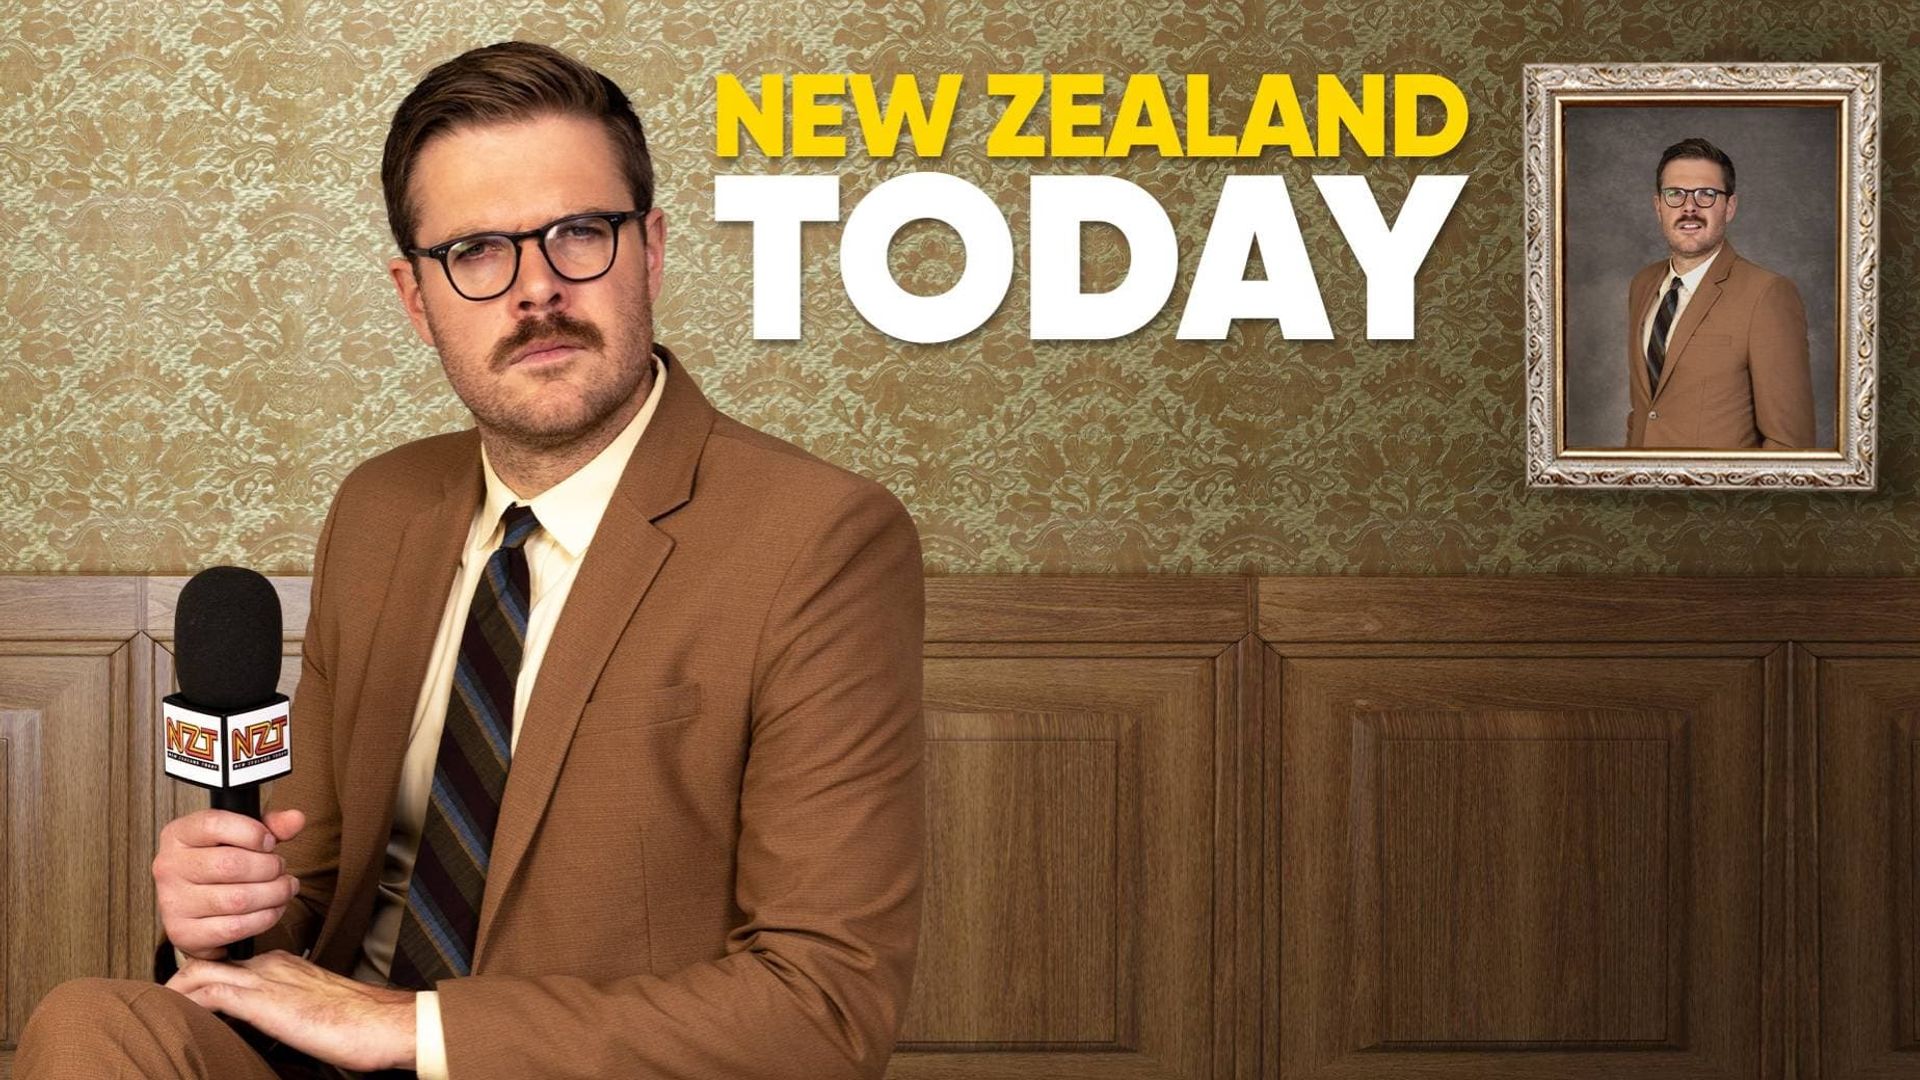 New Zealand Today background